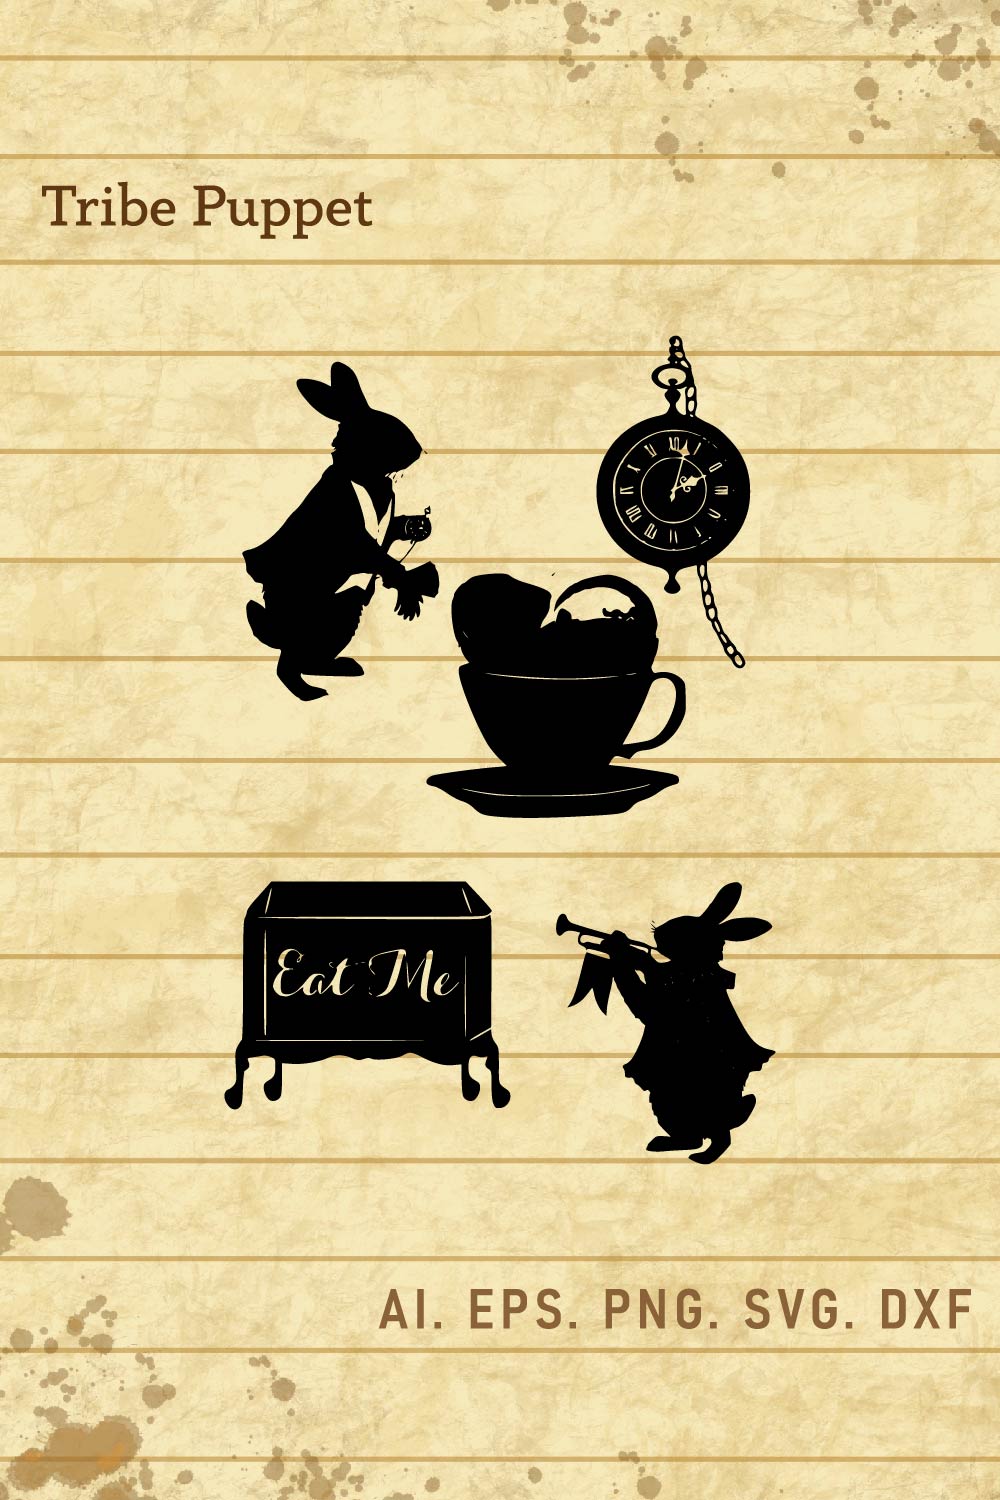 Alice In Wonderland pinterest preview image.